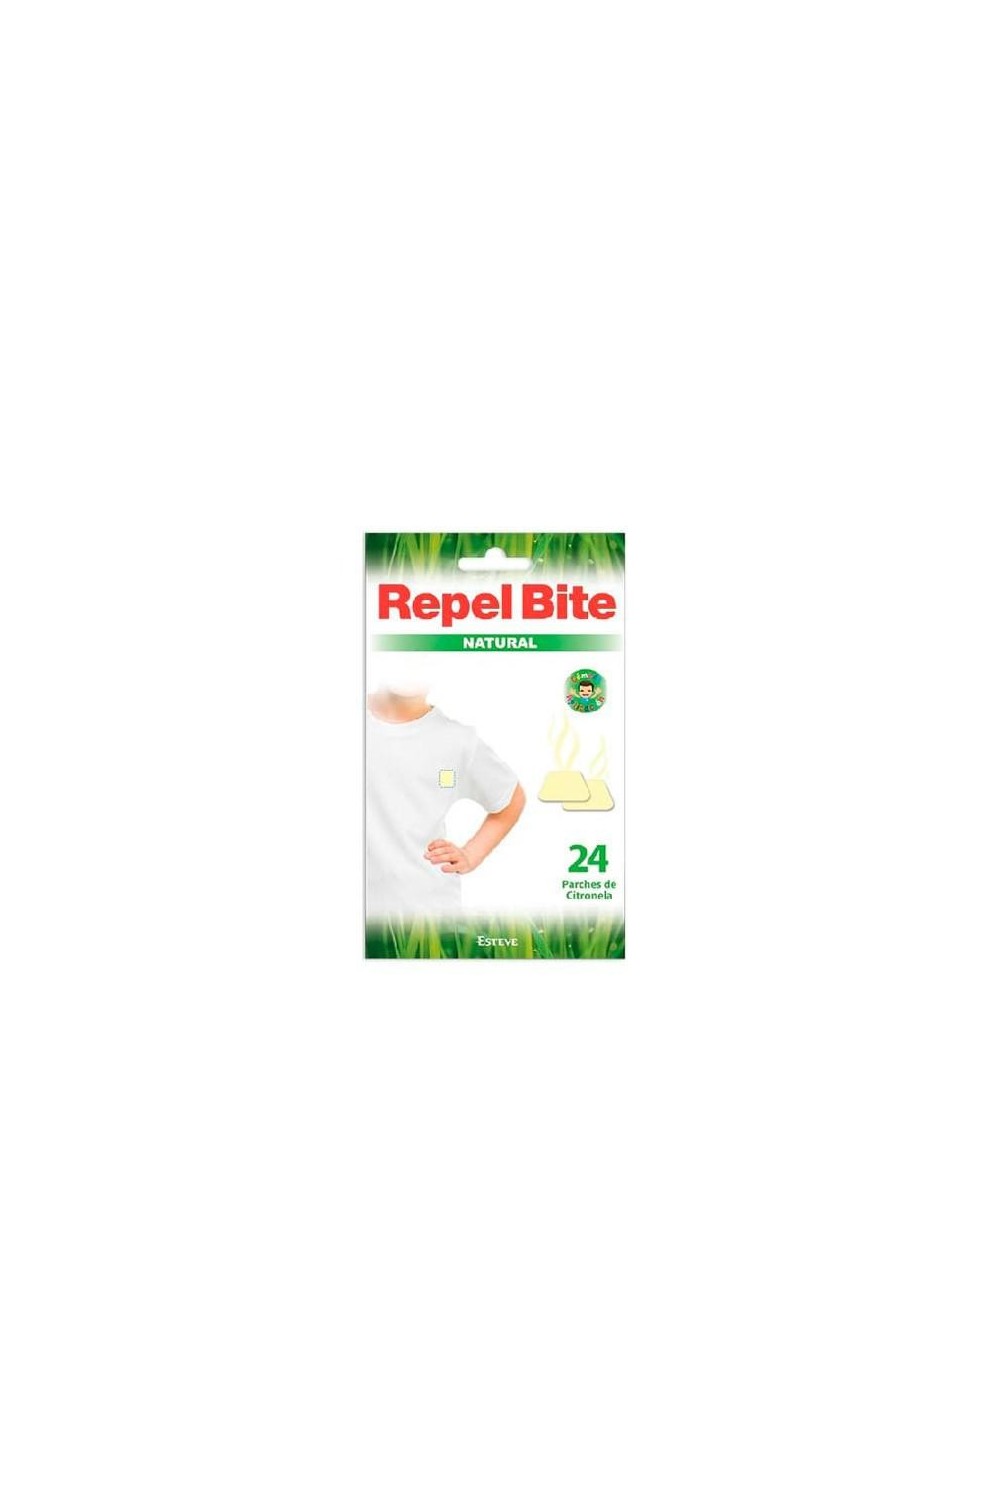 AFTERBITE - Repel Bite Repelbite Natural Repel Patch